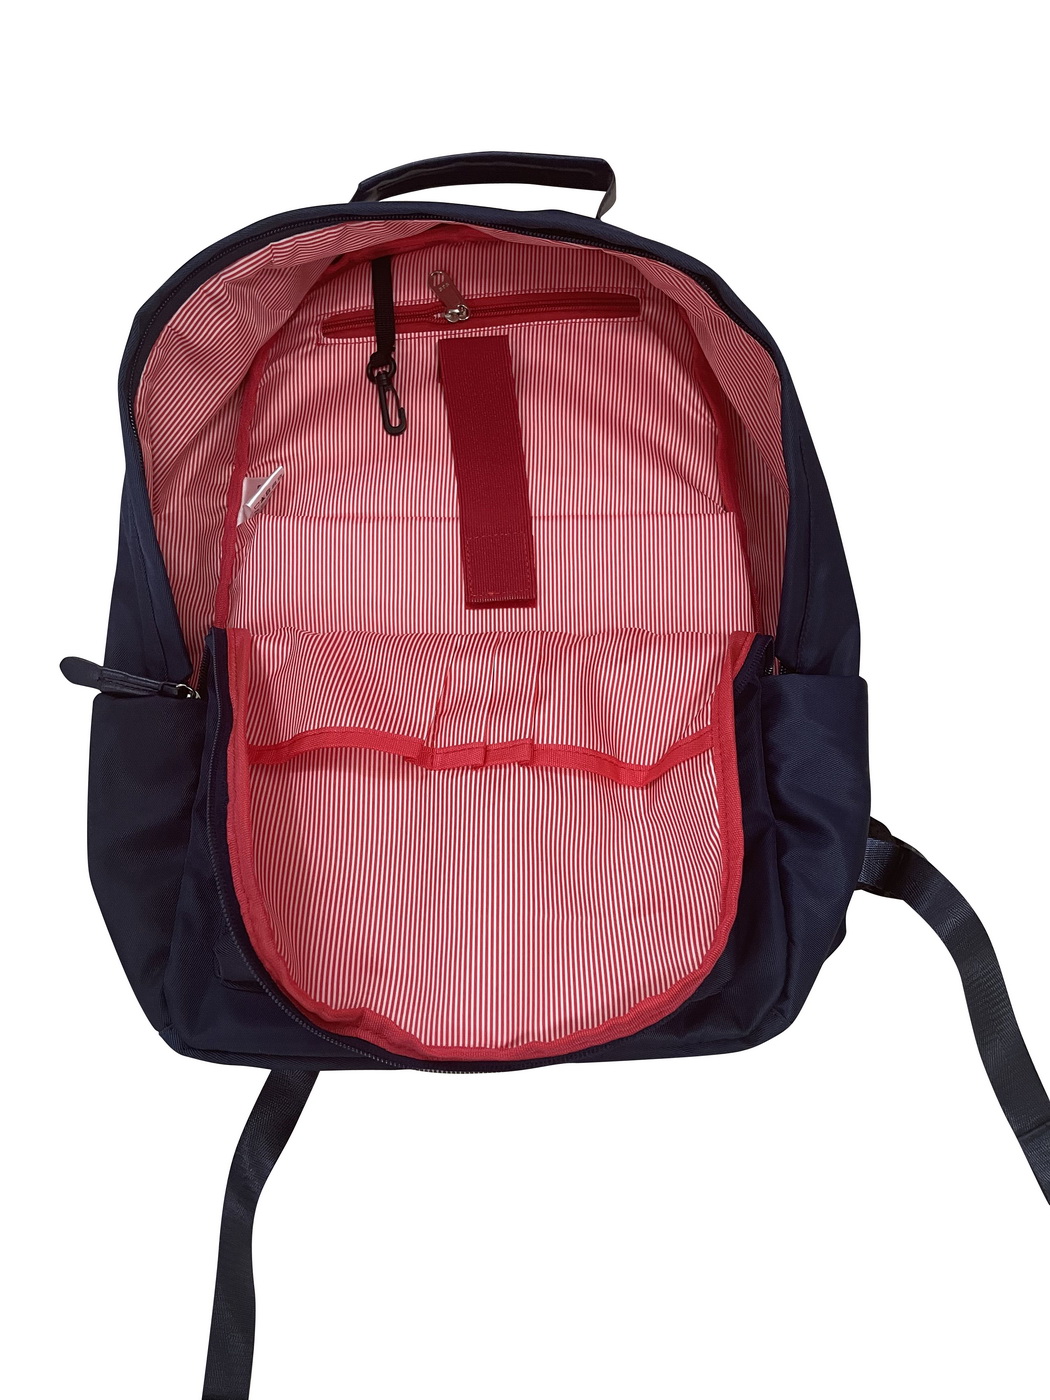 WADIRUM Waterproof Roomy Fashion Backpack for Teen Girl